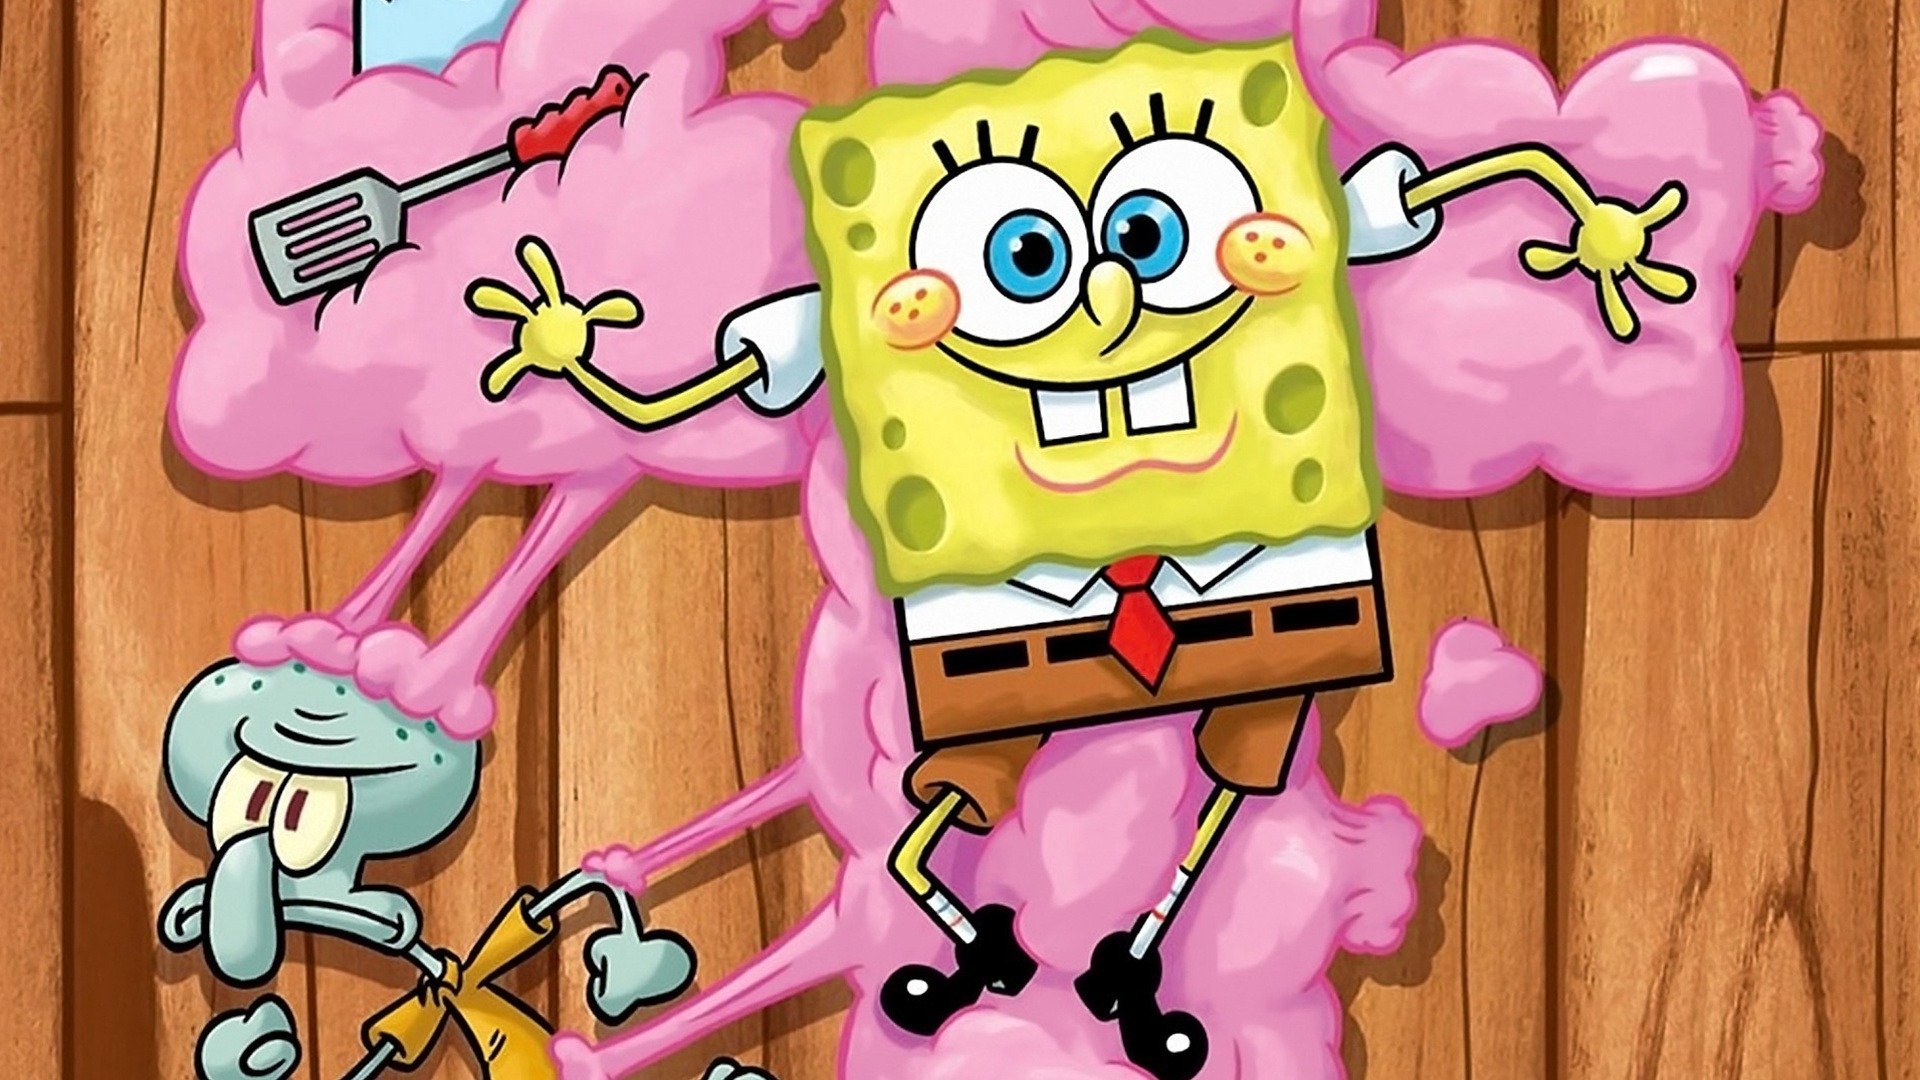 SpongeBob SquarePants Season 4, Episode 3